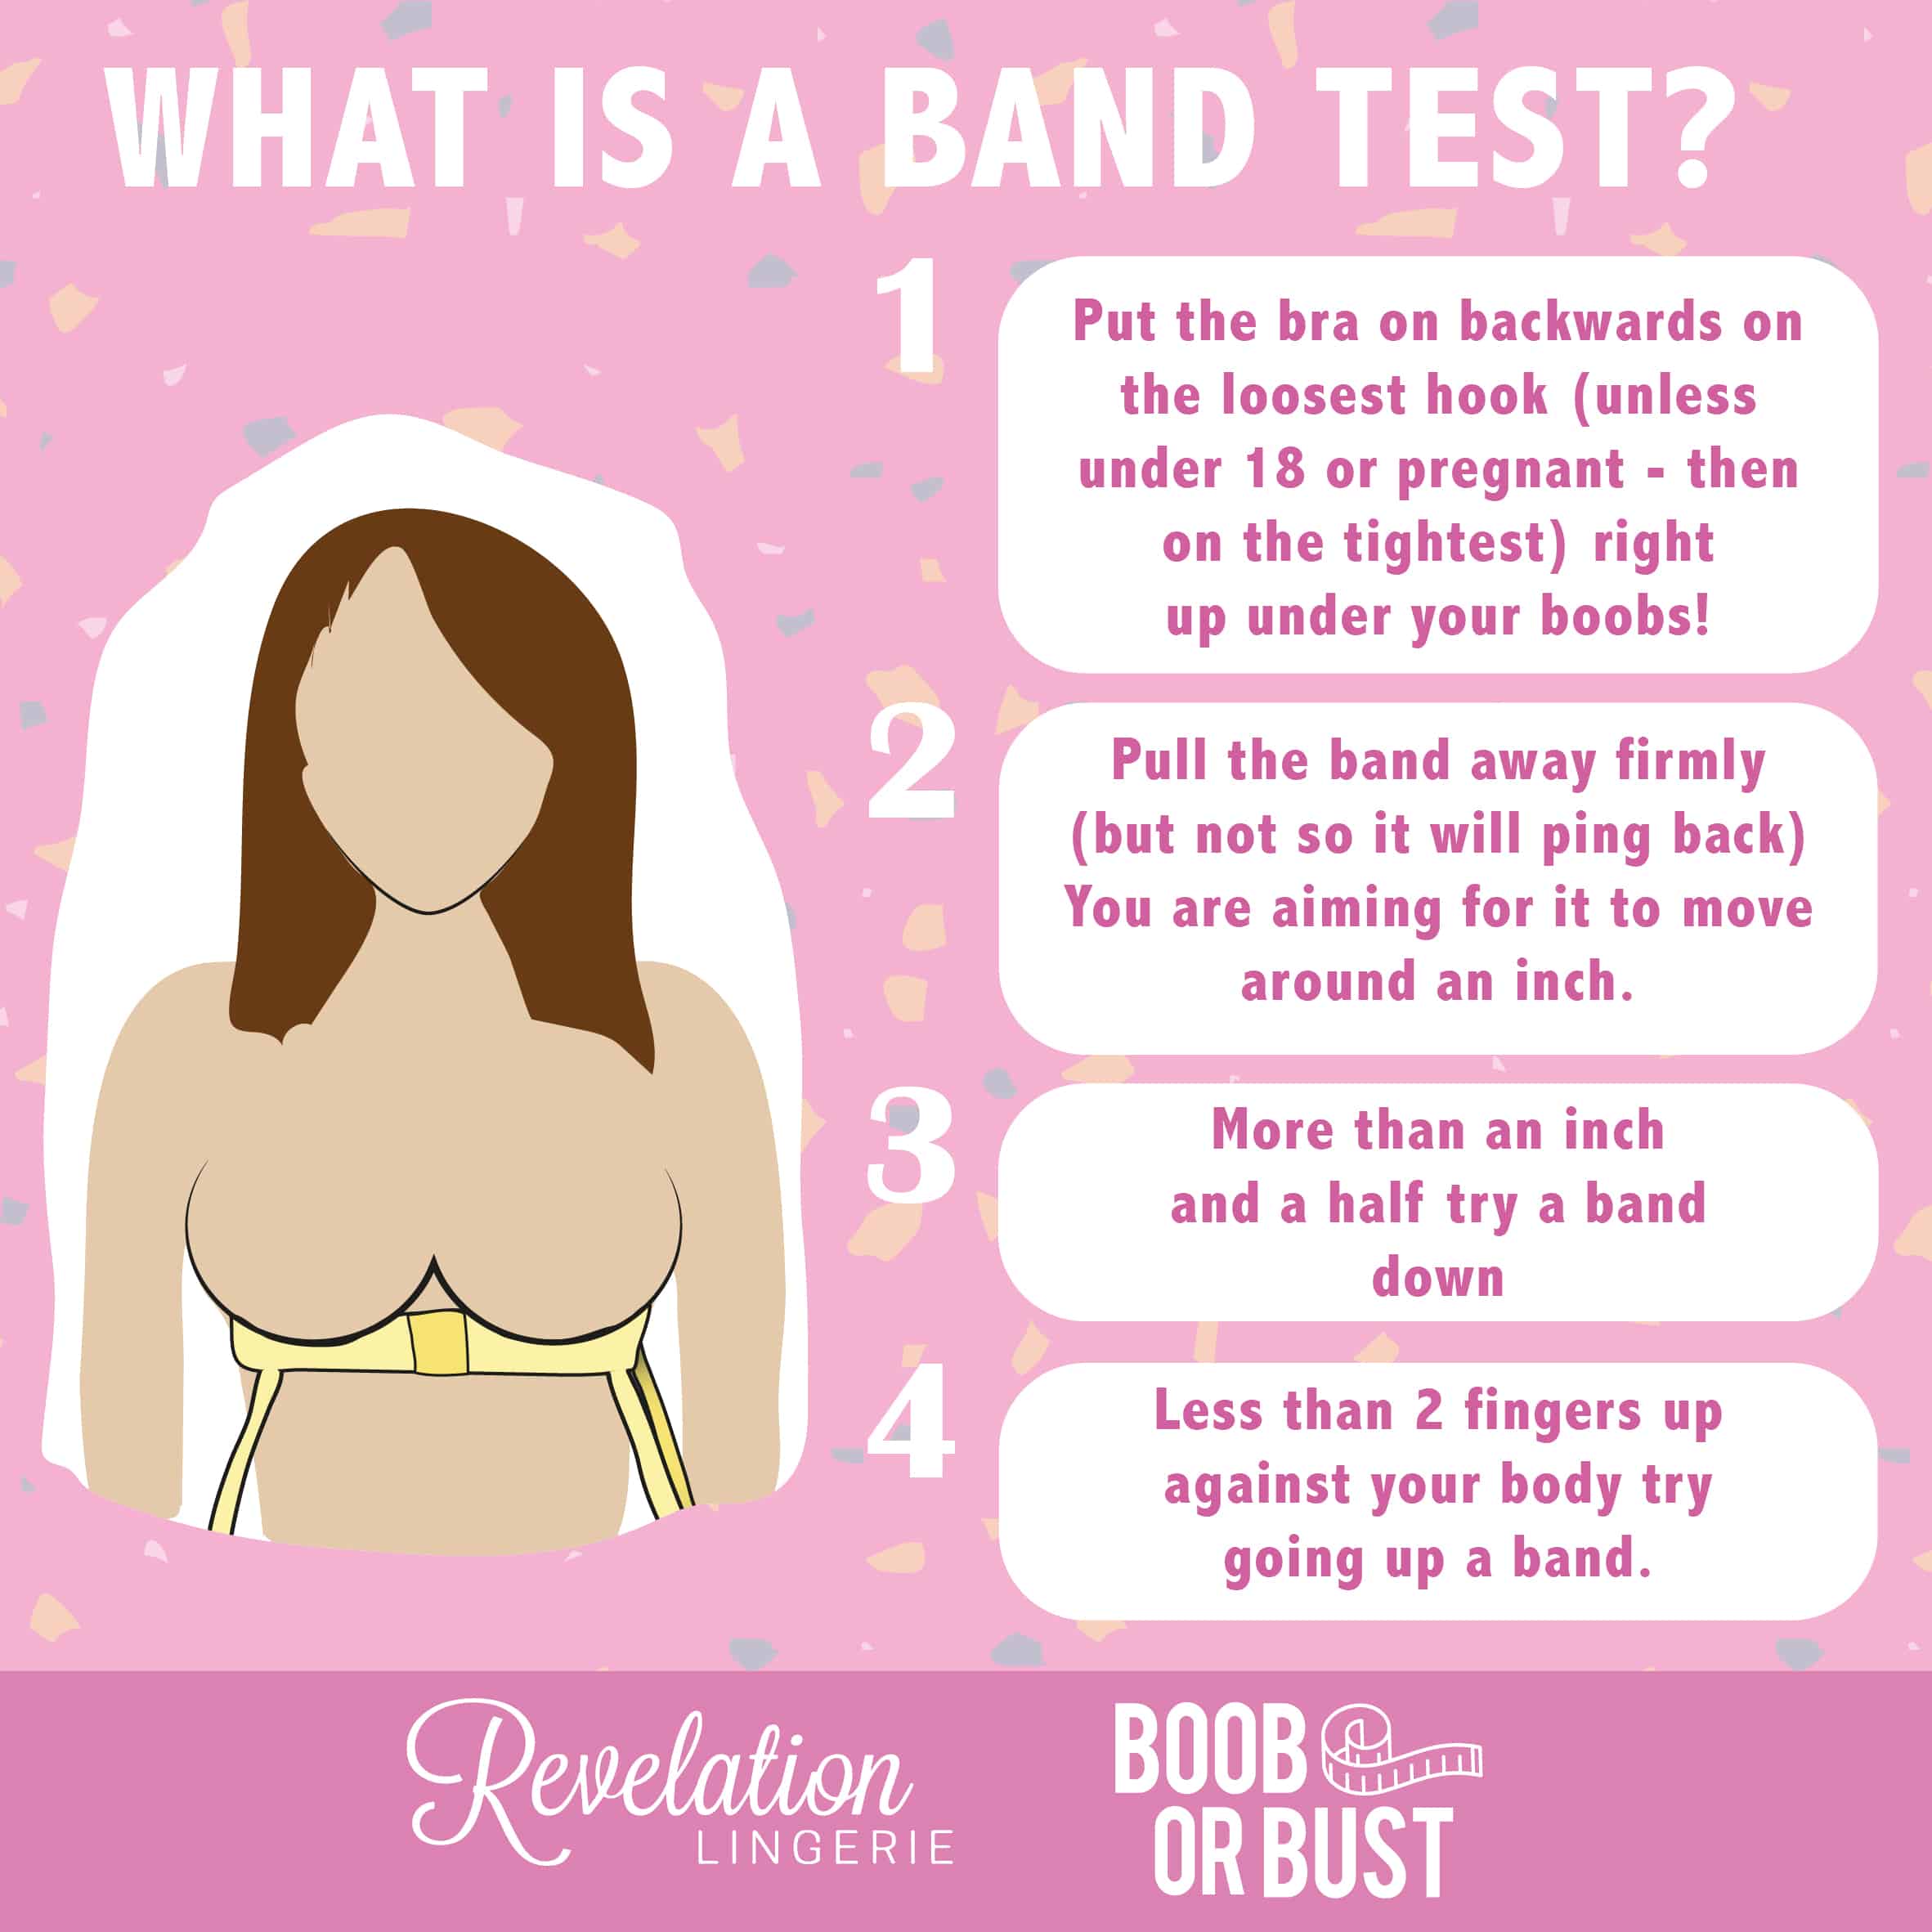 What size bra should I wear? I measure 26 under bust & 31 over